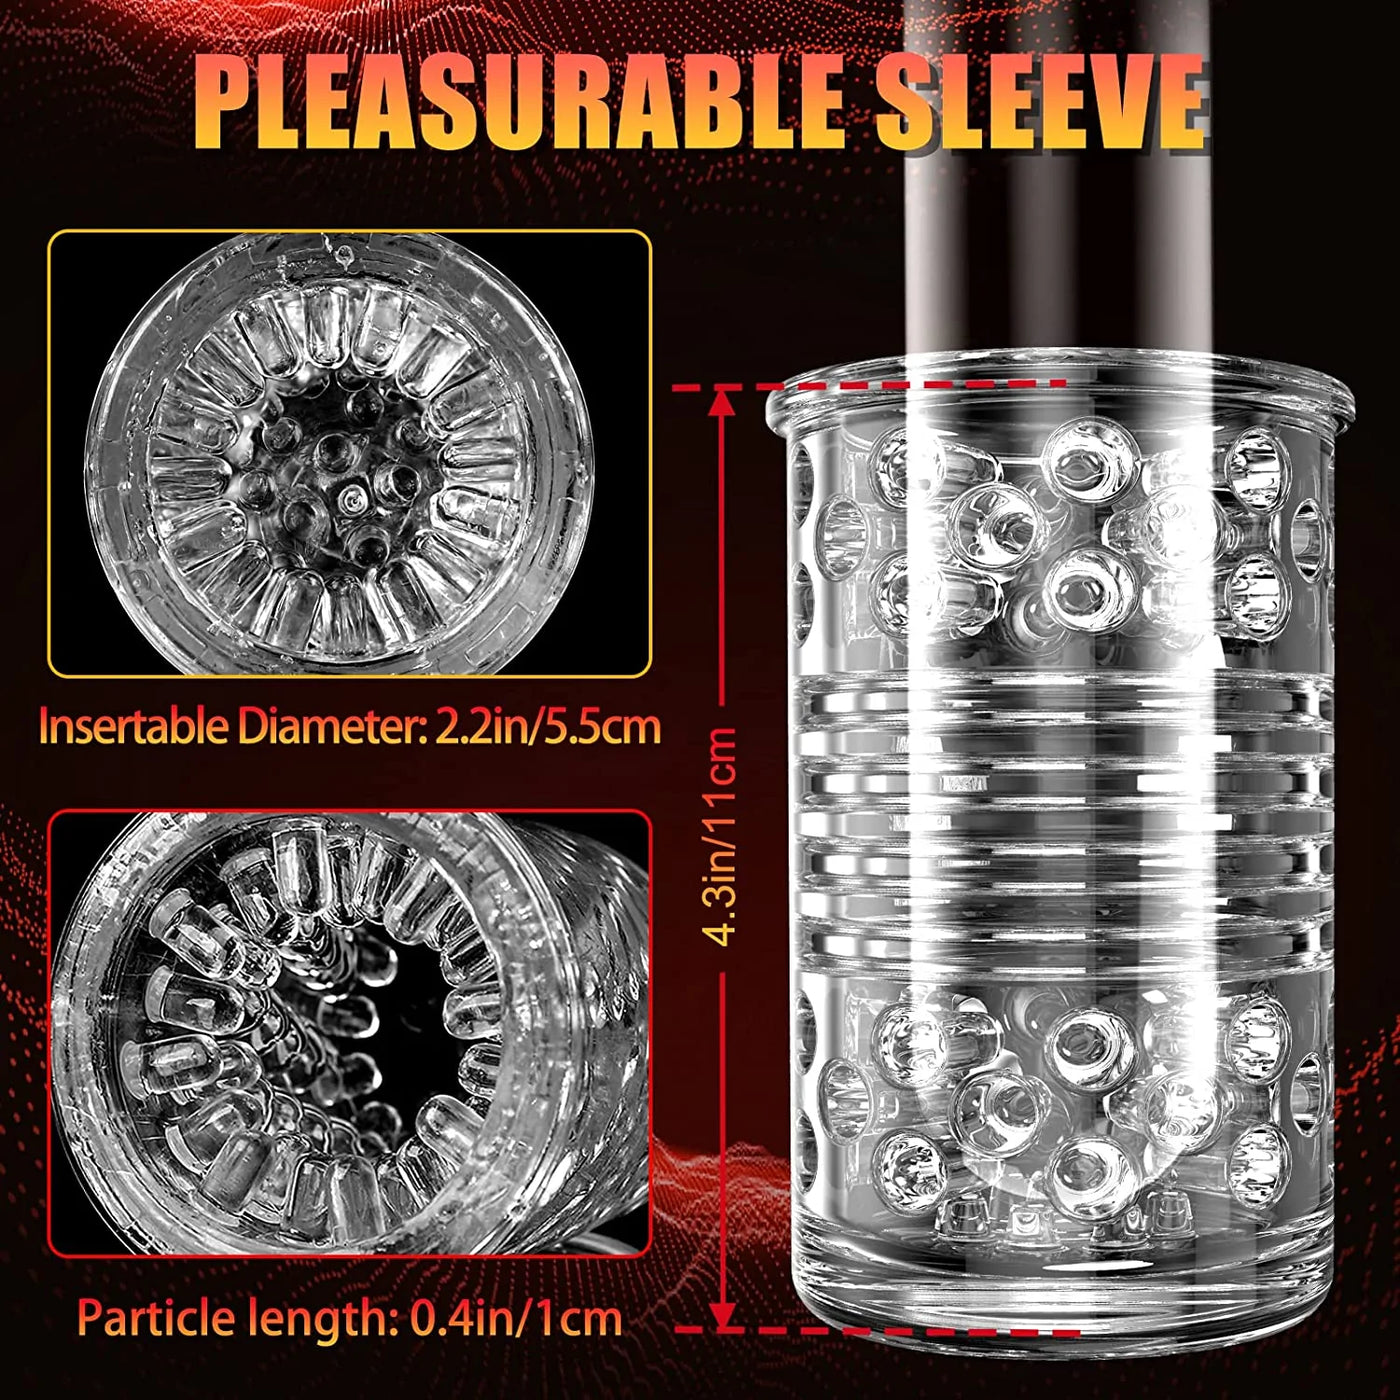 Free telescopic male masturbation cup that rotates into a vaginal vibrator